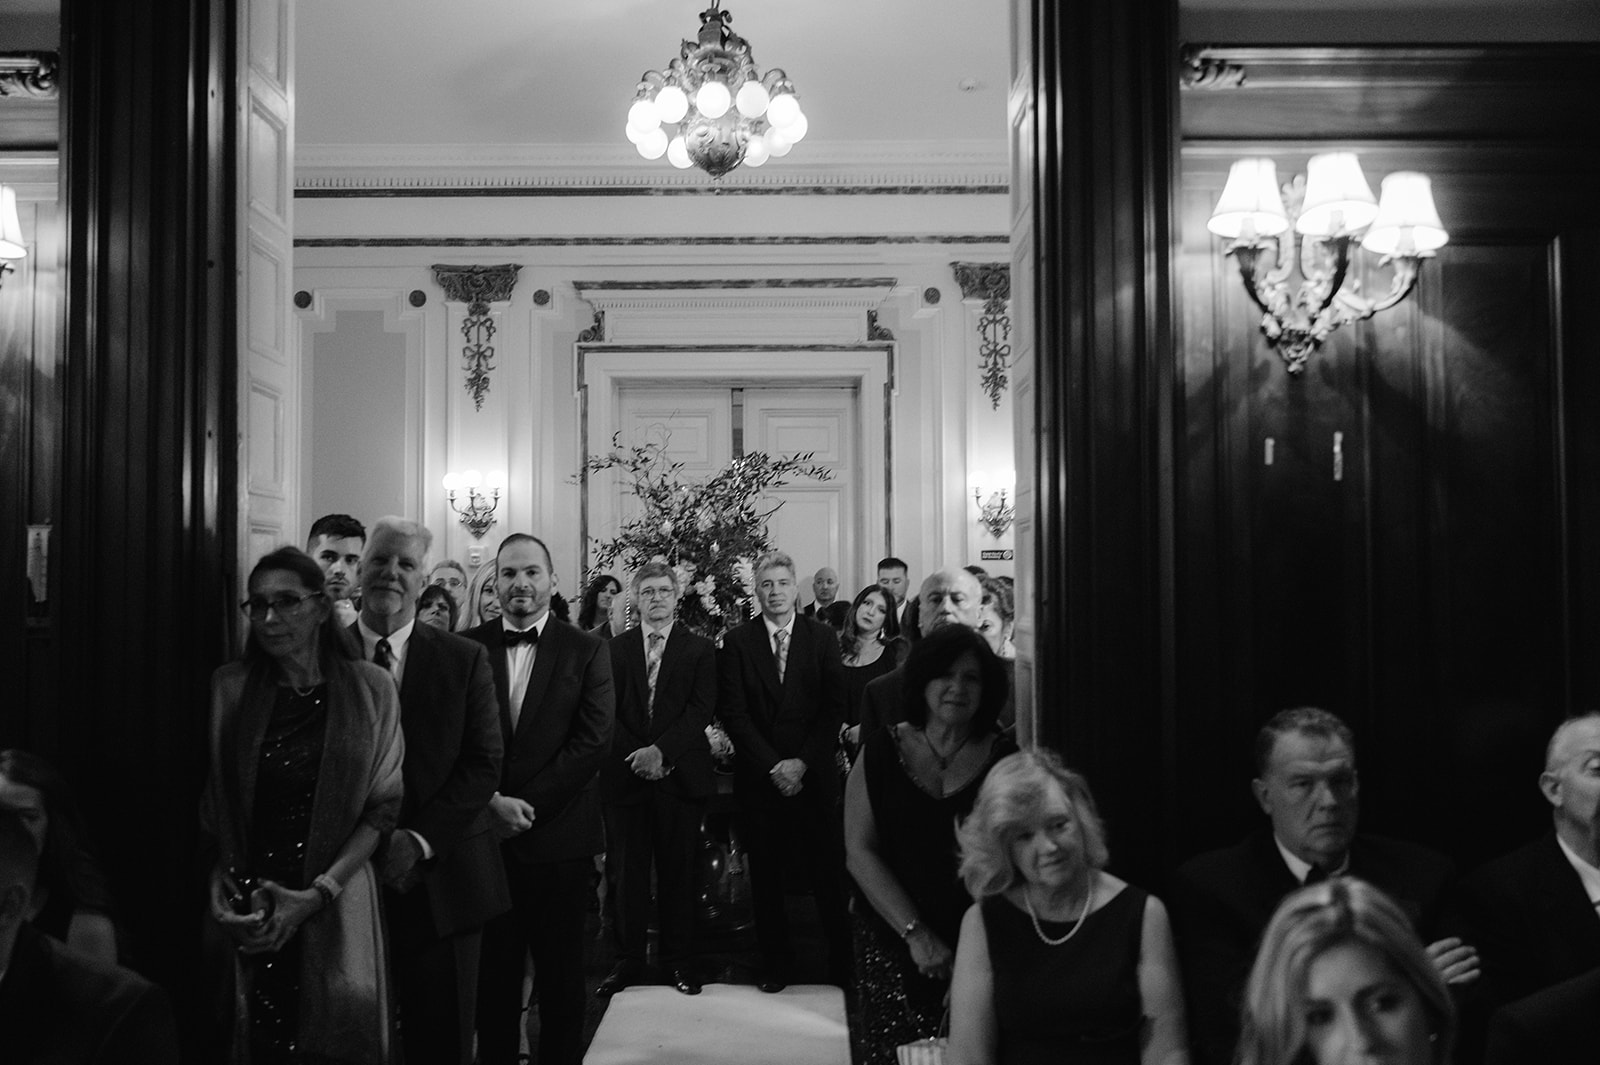 Bourne Mansion indoor wedding ceremony overflow guests.